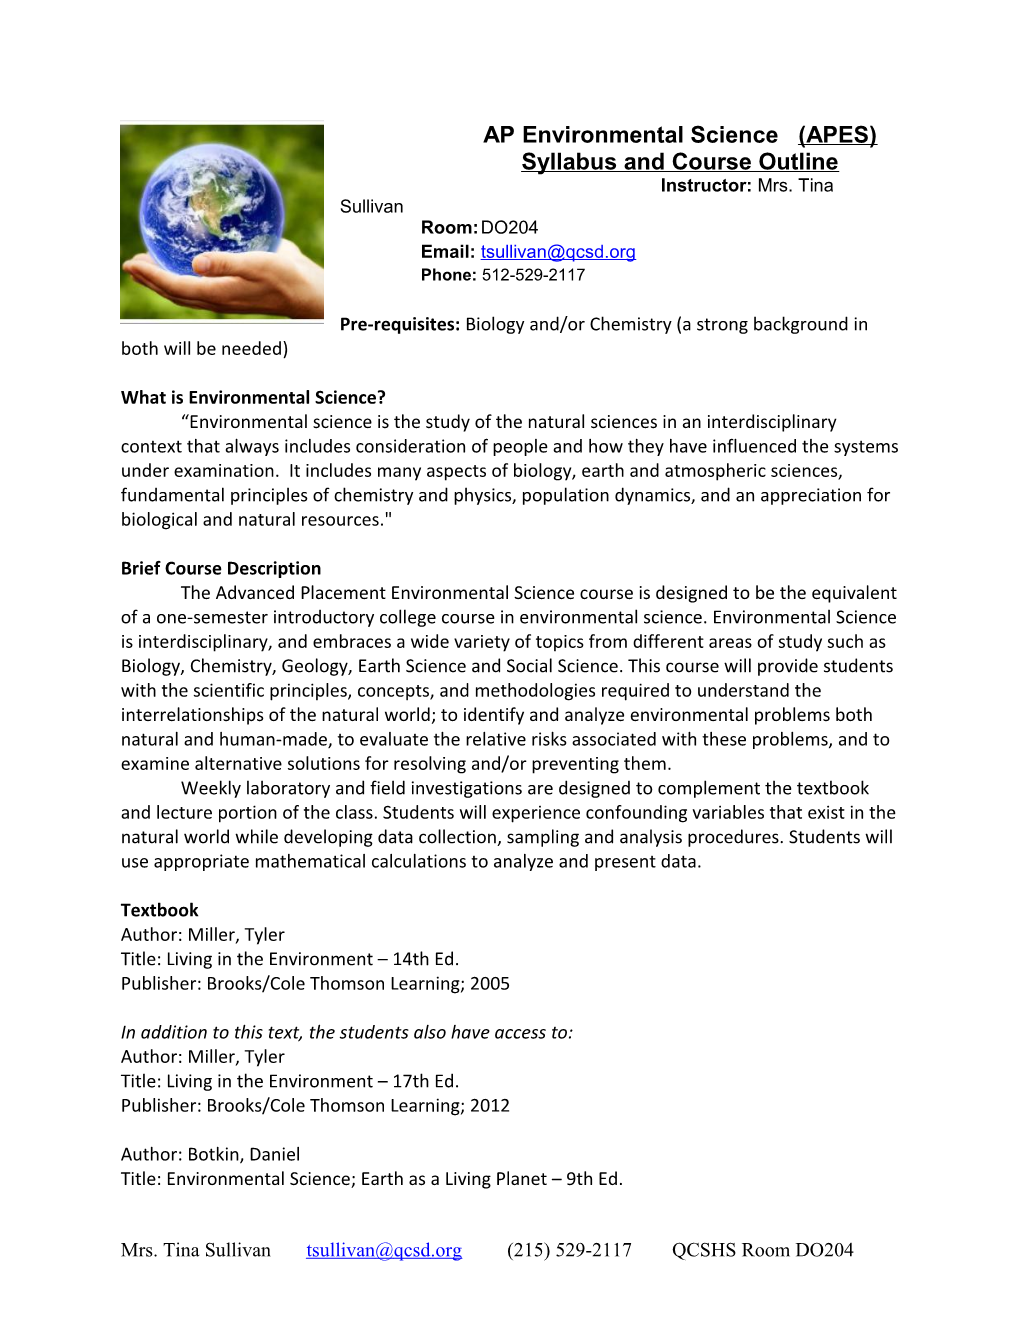 AP Environmental Science (APES) Course Syllabus 2015-2016